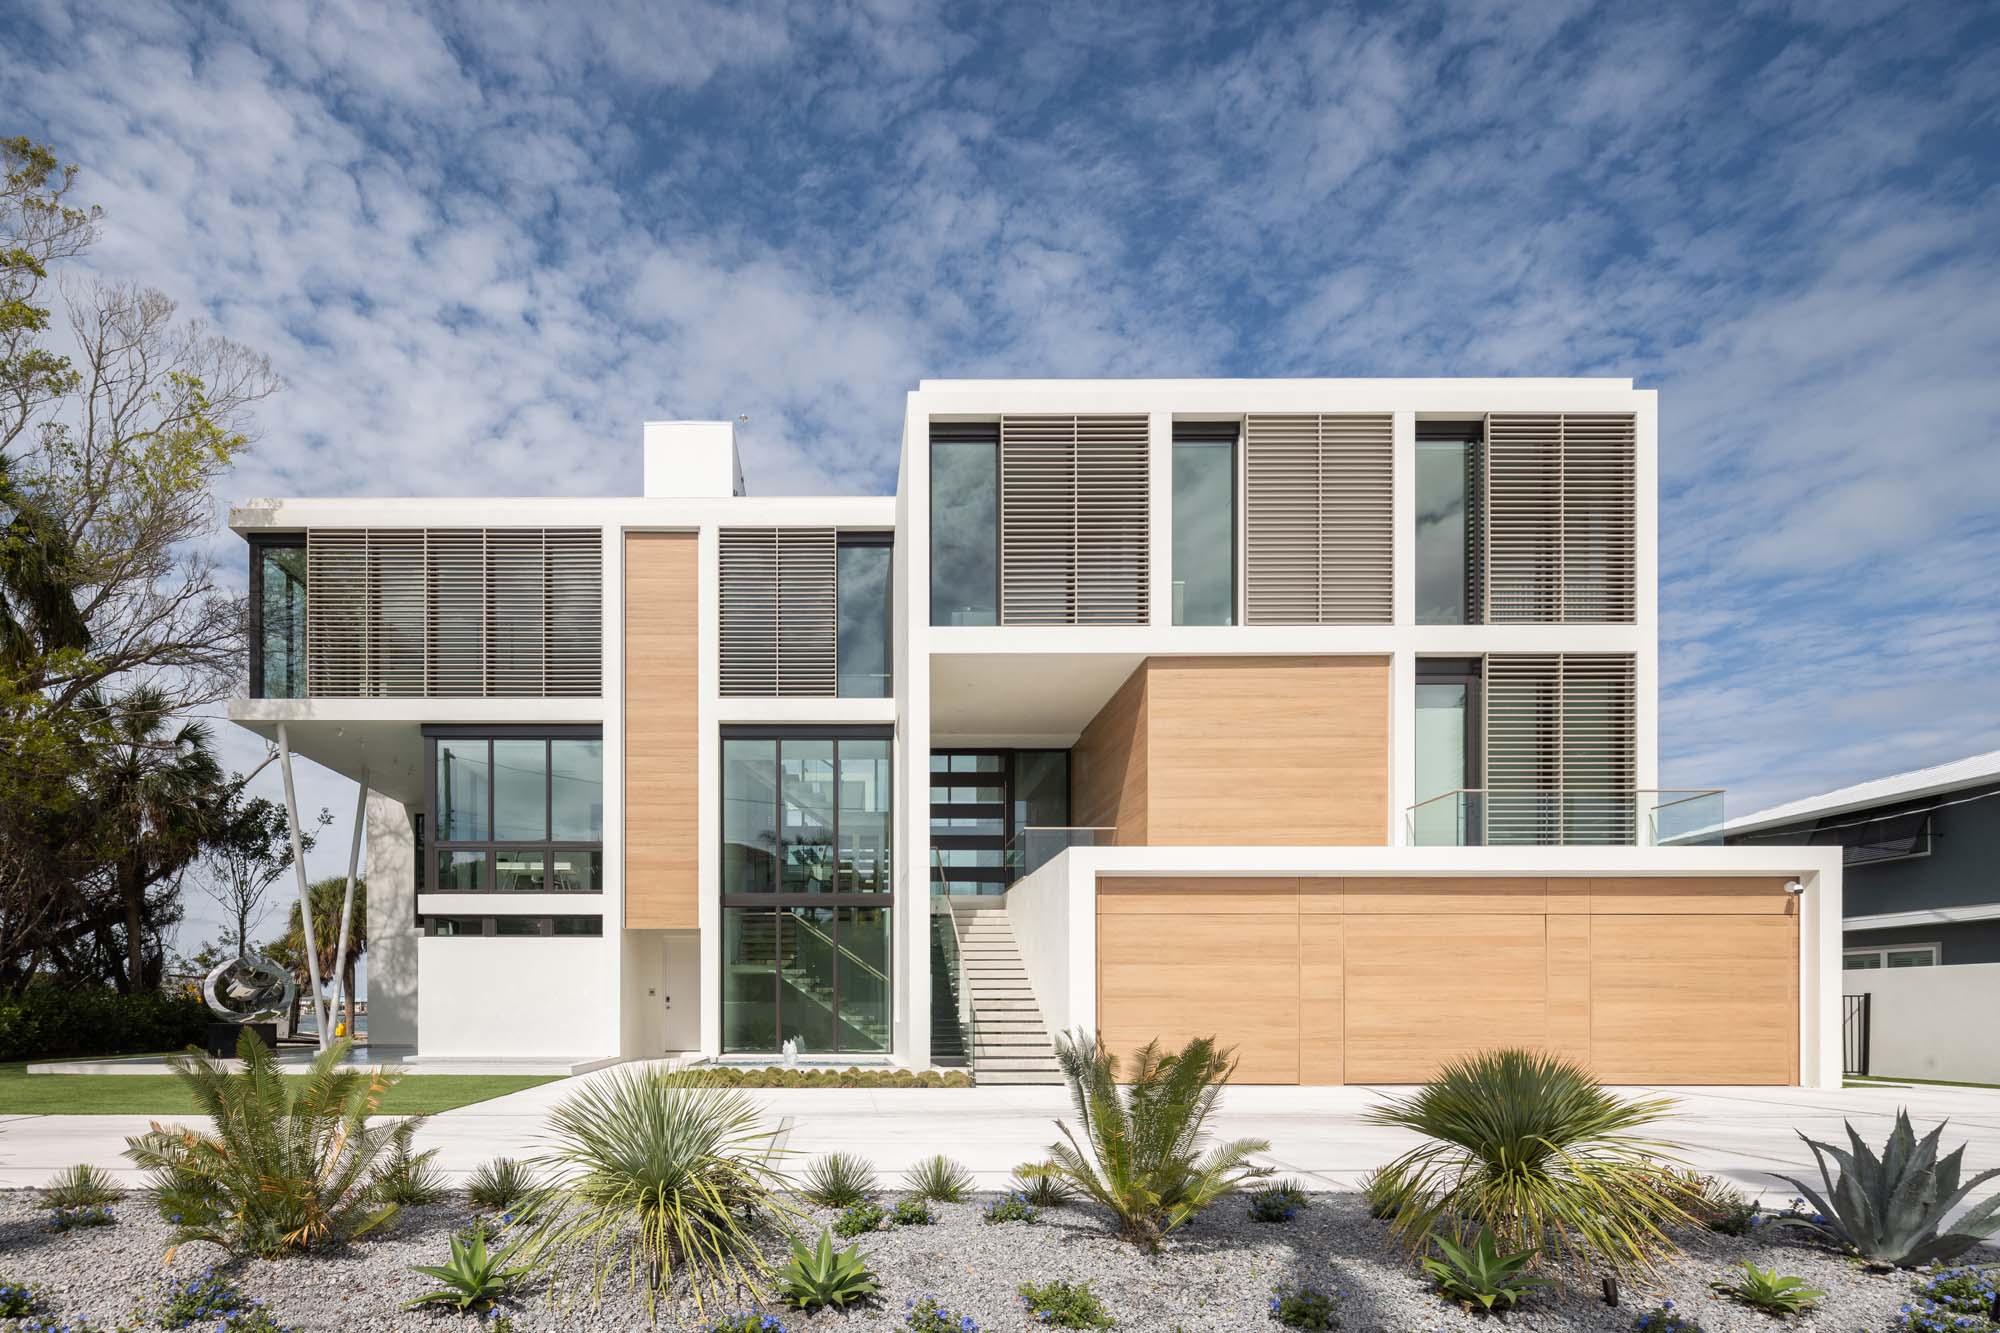 Kelly Residence
Sarasota, Fl. 
DSDG Architects
Trinity Construction & Design